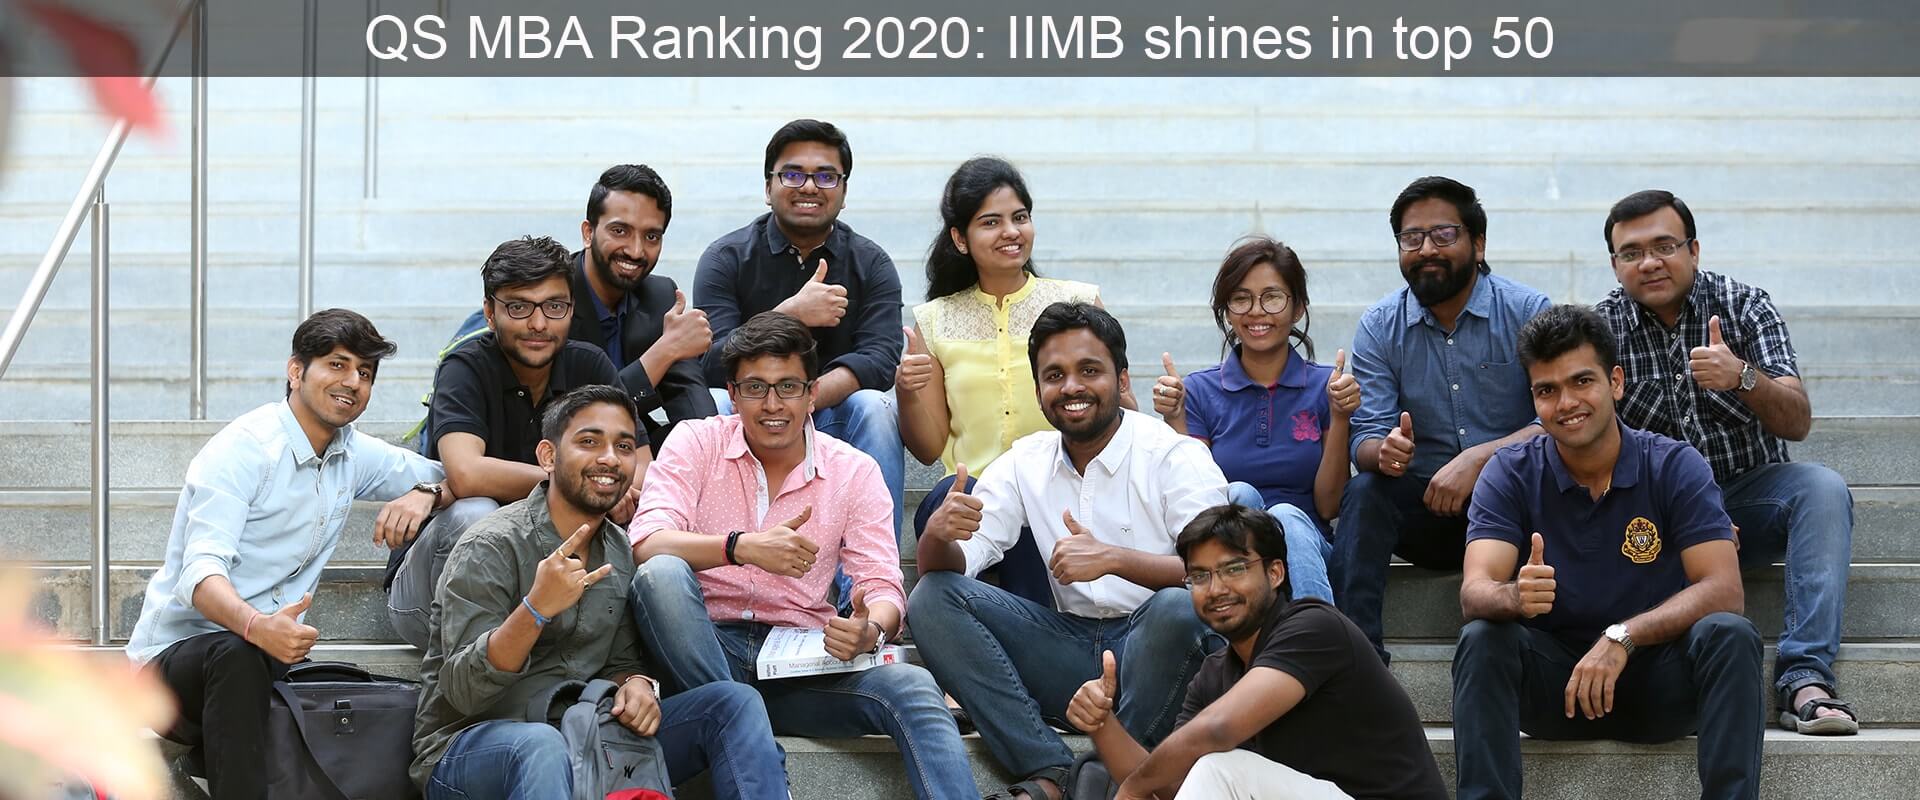 QS MBA Rankings 2020: IIMB shines in top 50